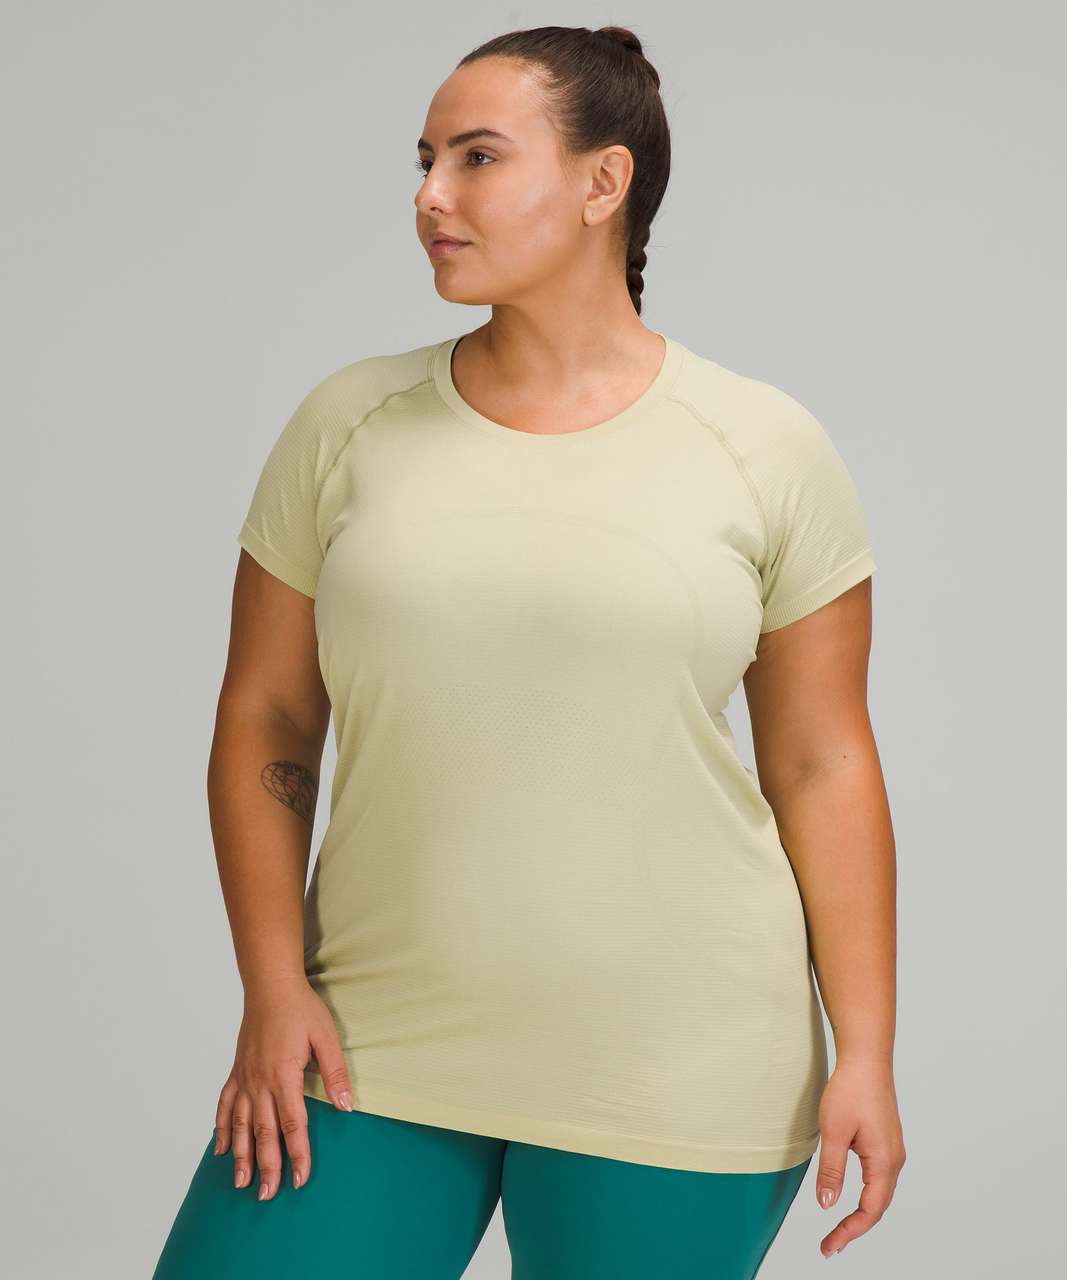 Lululemon Swiftly Tech Short Sleeve Shirt 2.0 - Dew Green / Dew Green